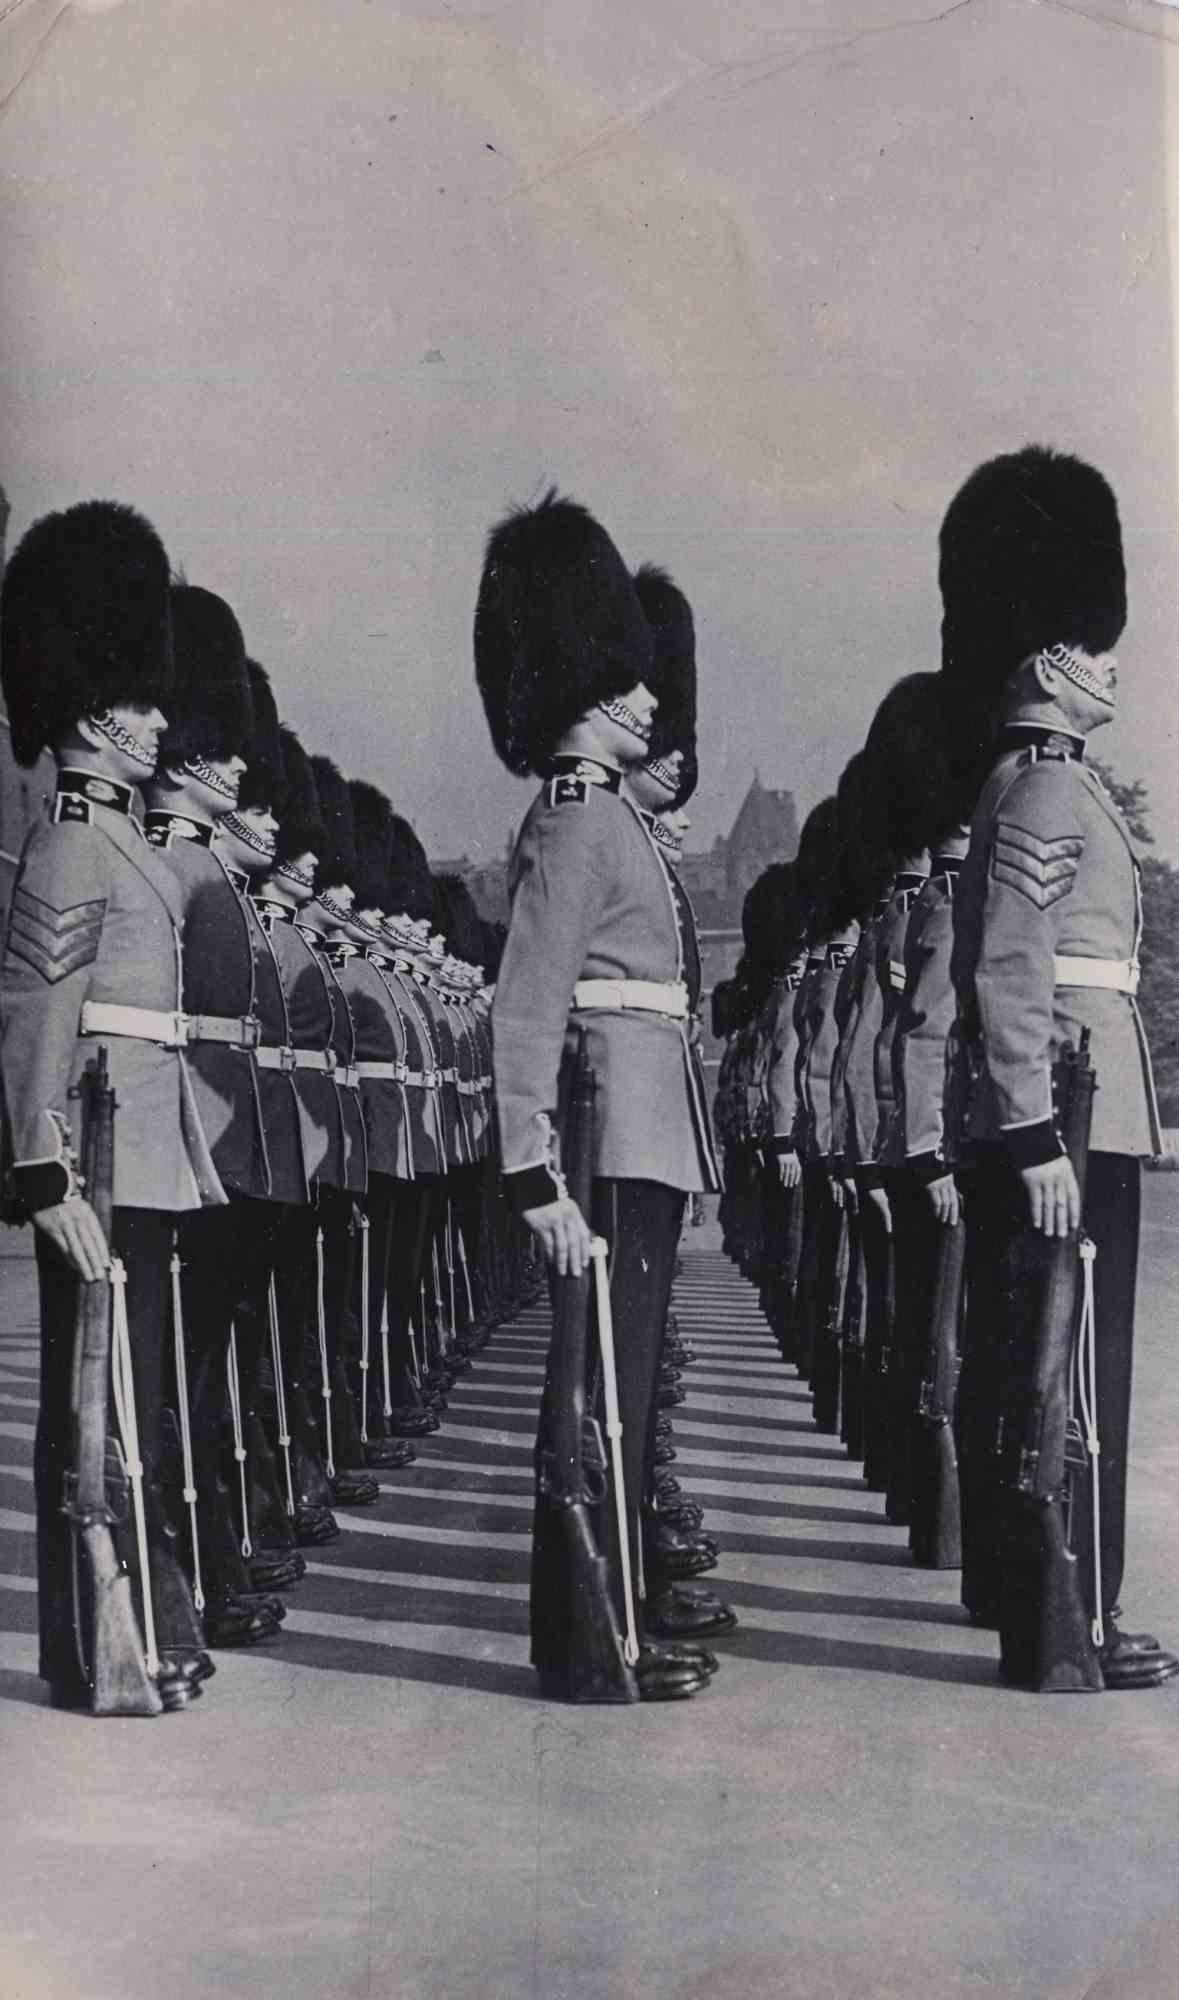 Old days Photo - UK Royal Guard Ceremony, Keystone - Photo - 1960s